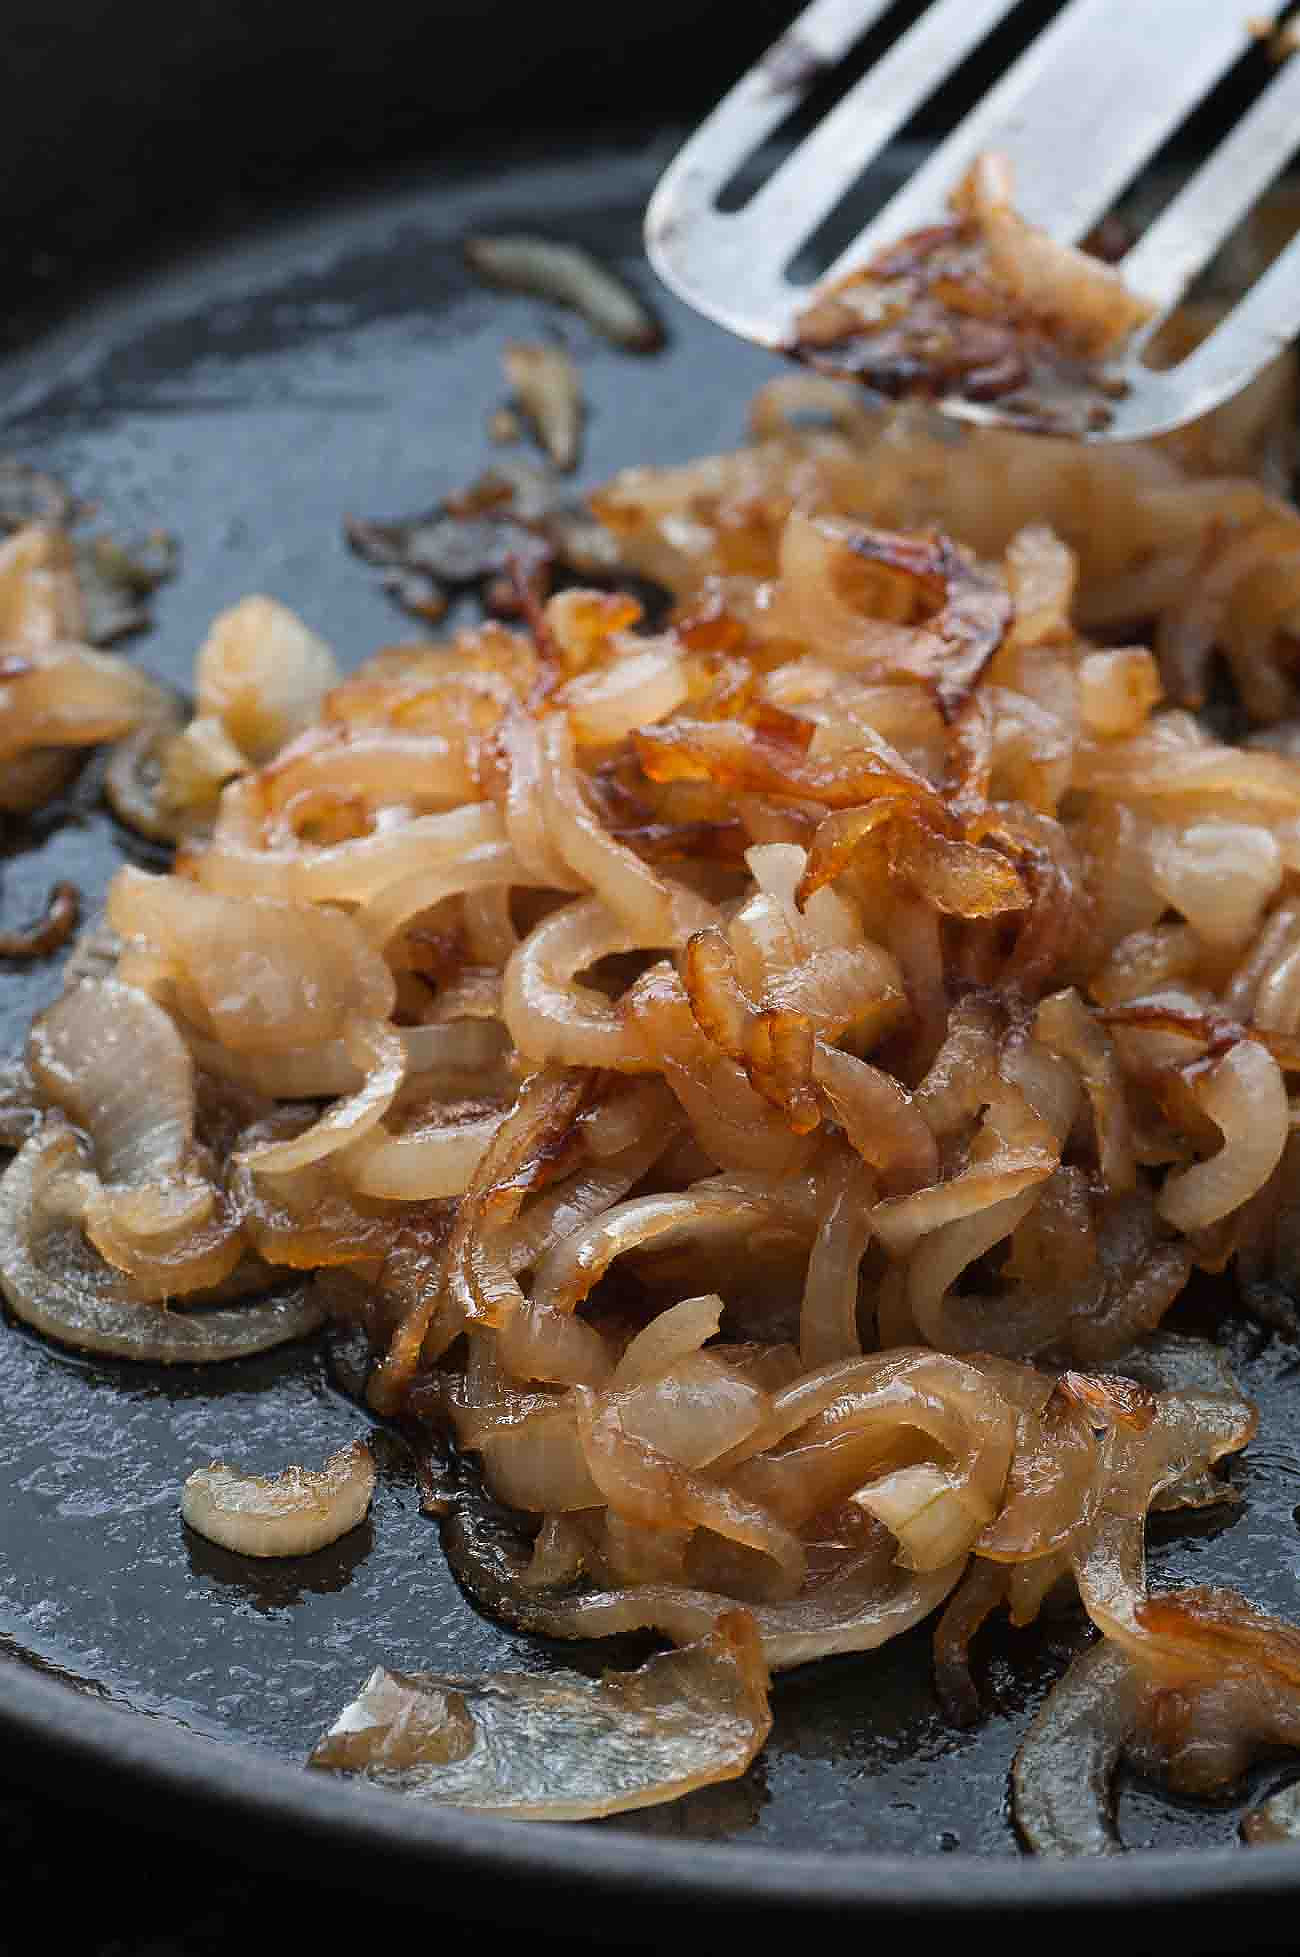 How To Make Homemade Caramelised Onions